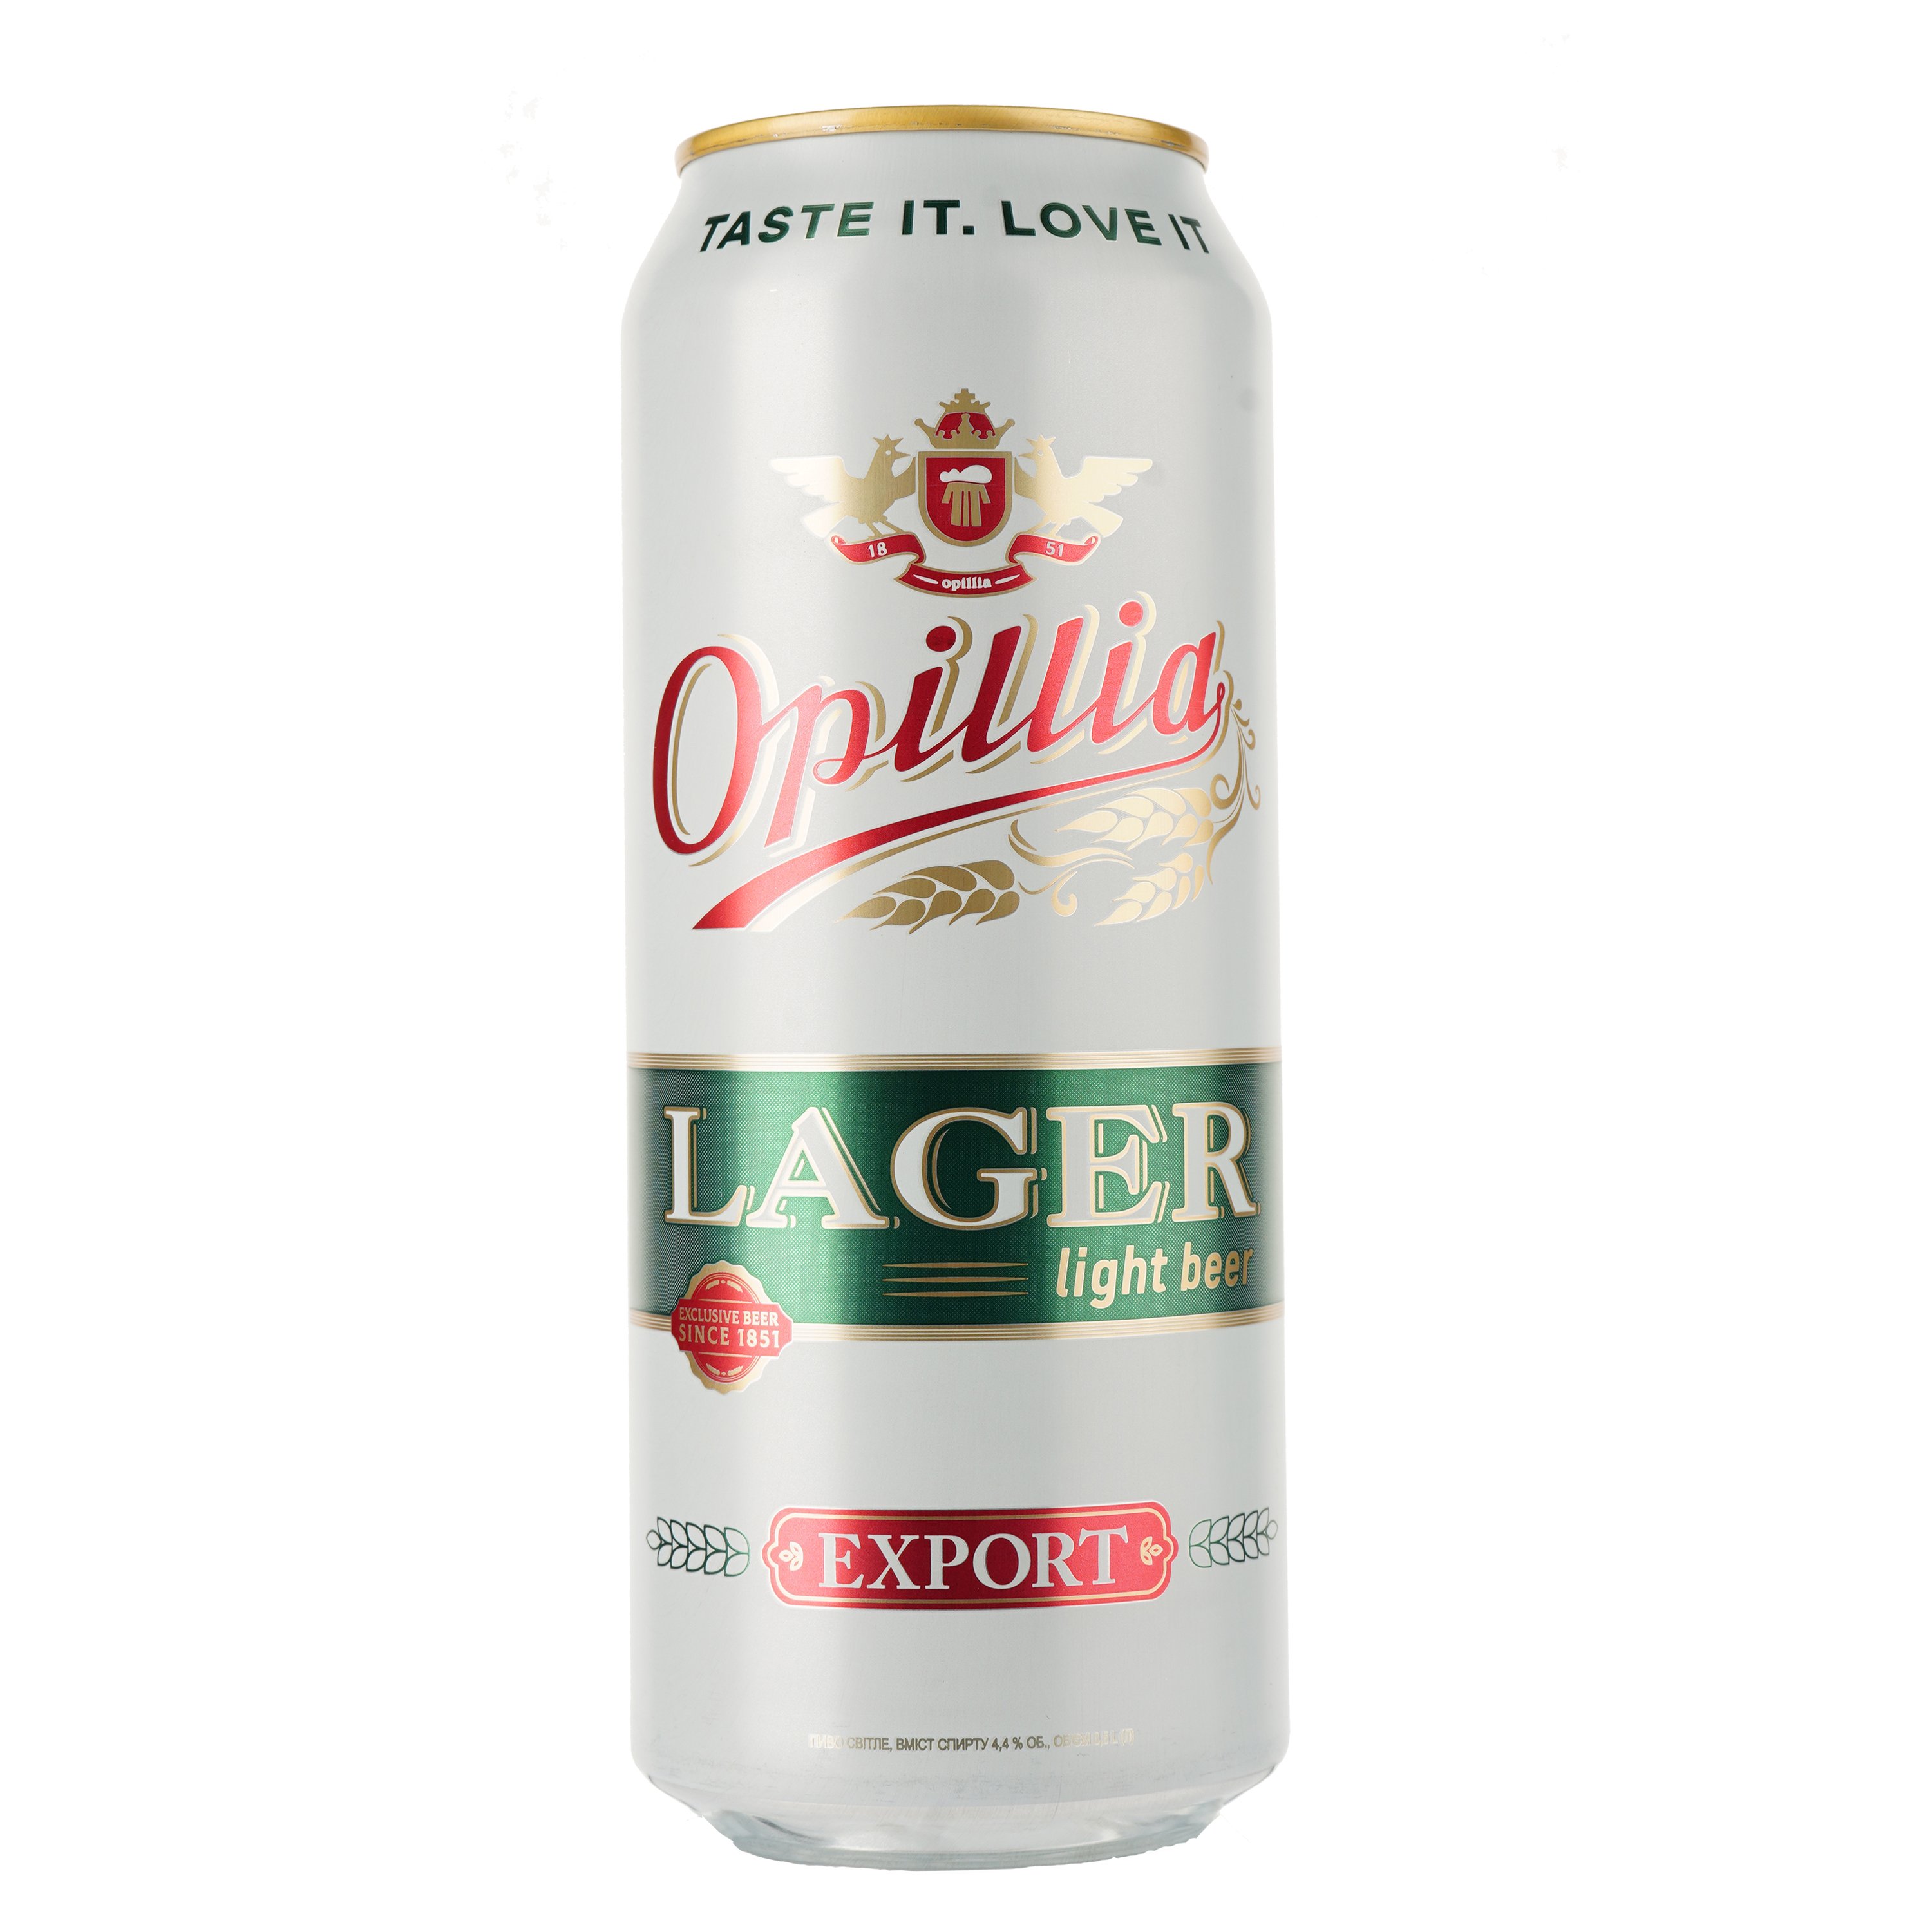 Пиво Опілля Lager Export, светлое, 4,4%, ж/б, 0,5 л - фото 1